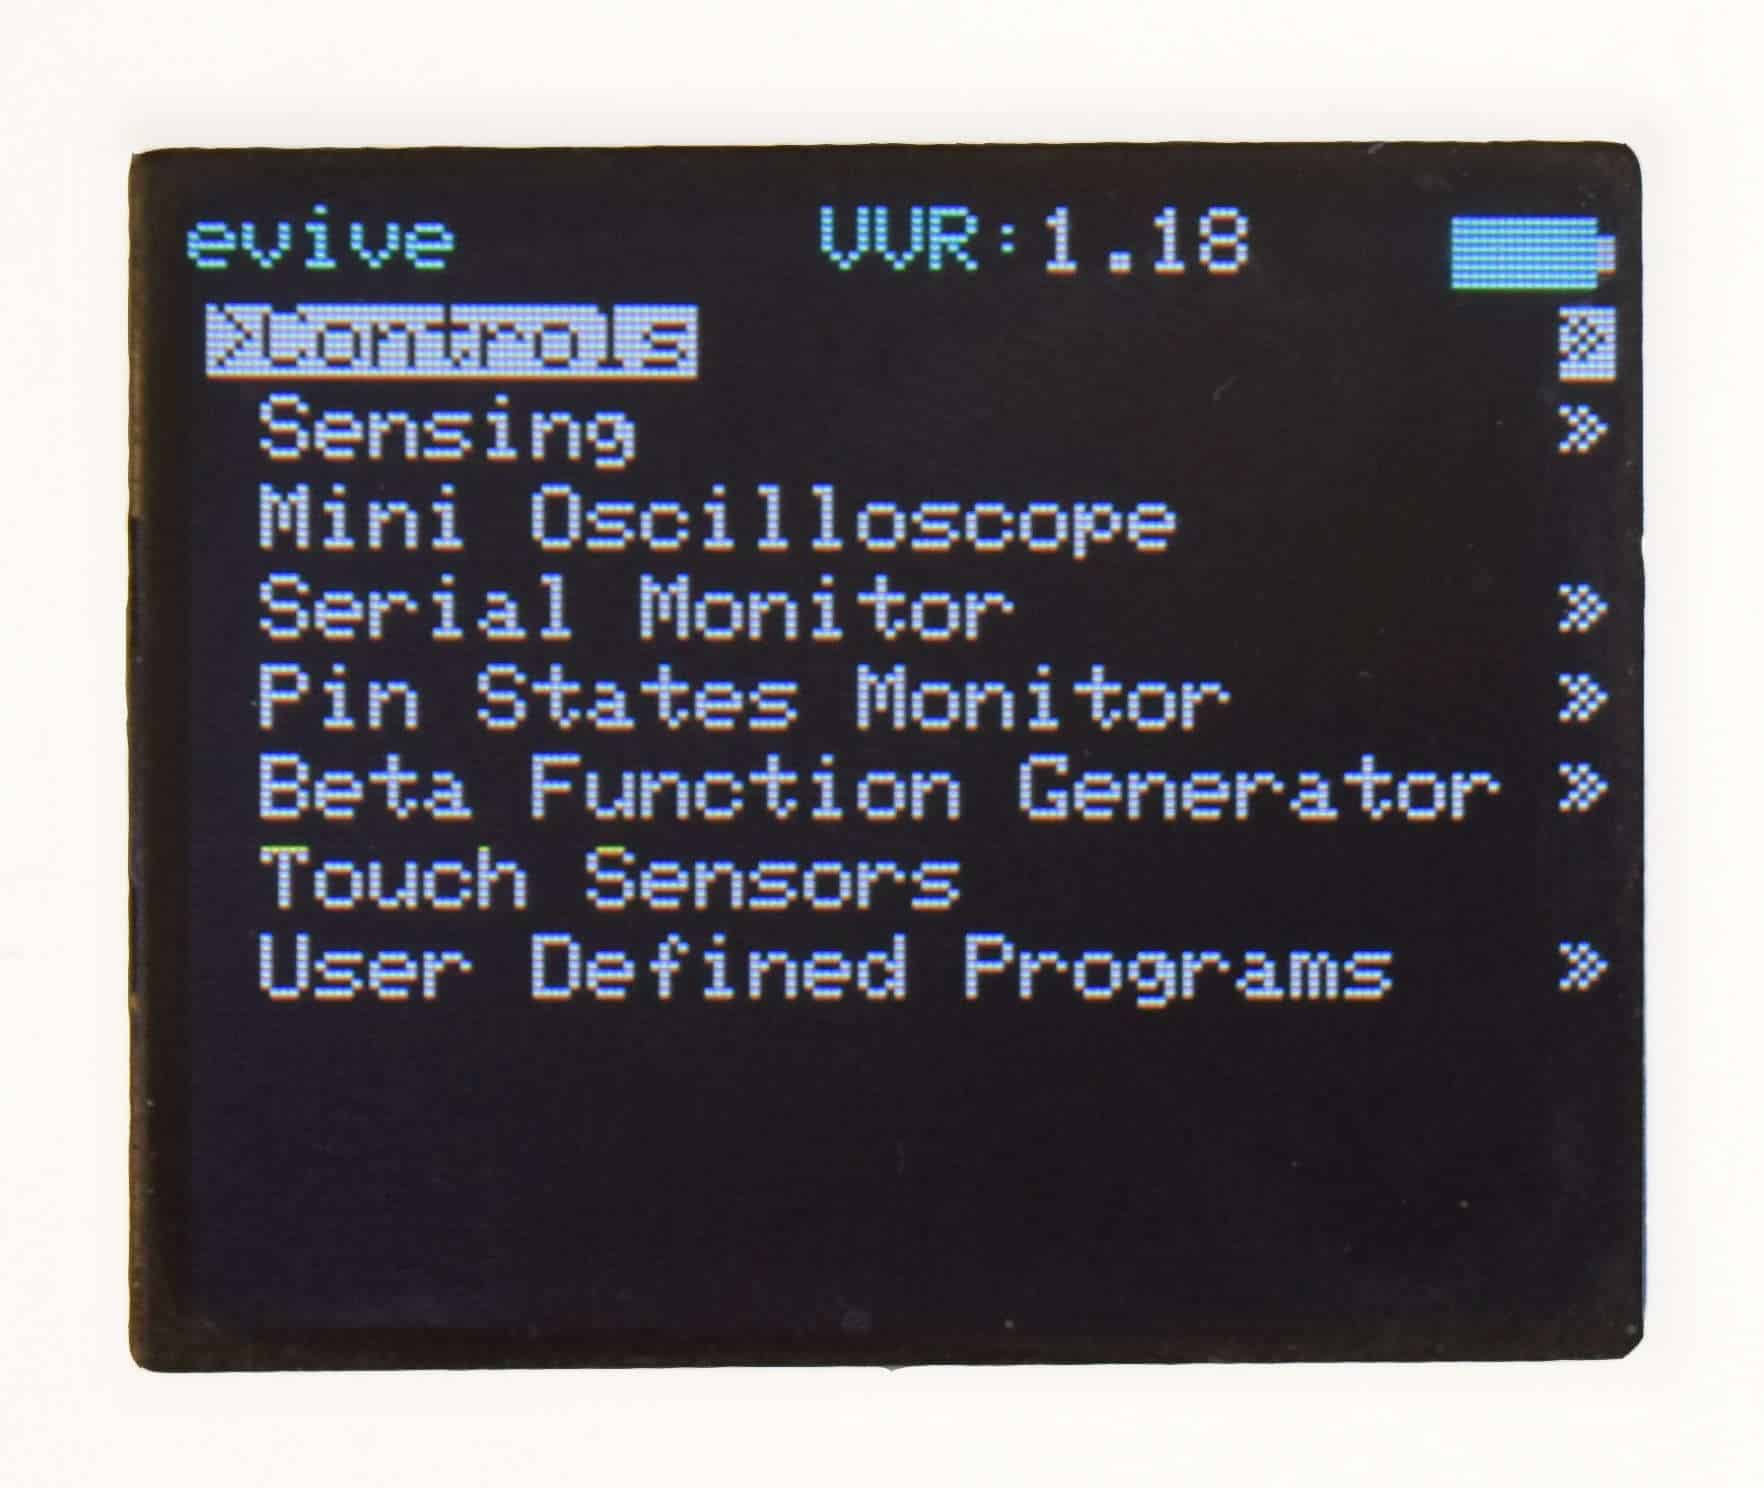 evive_menu_control